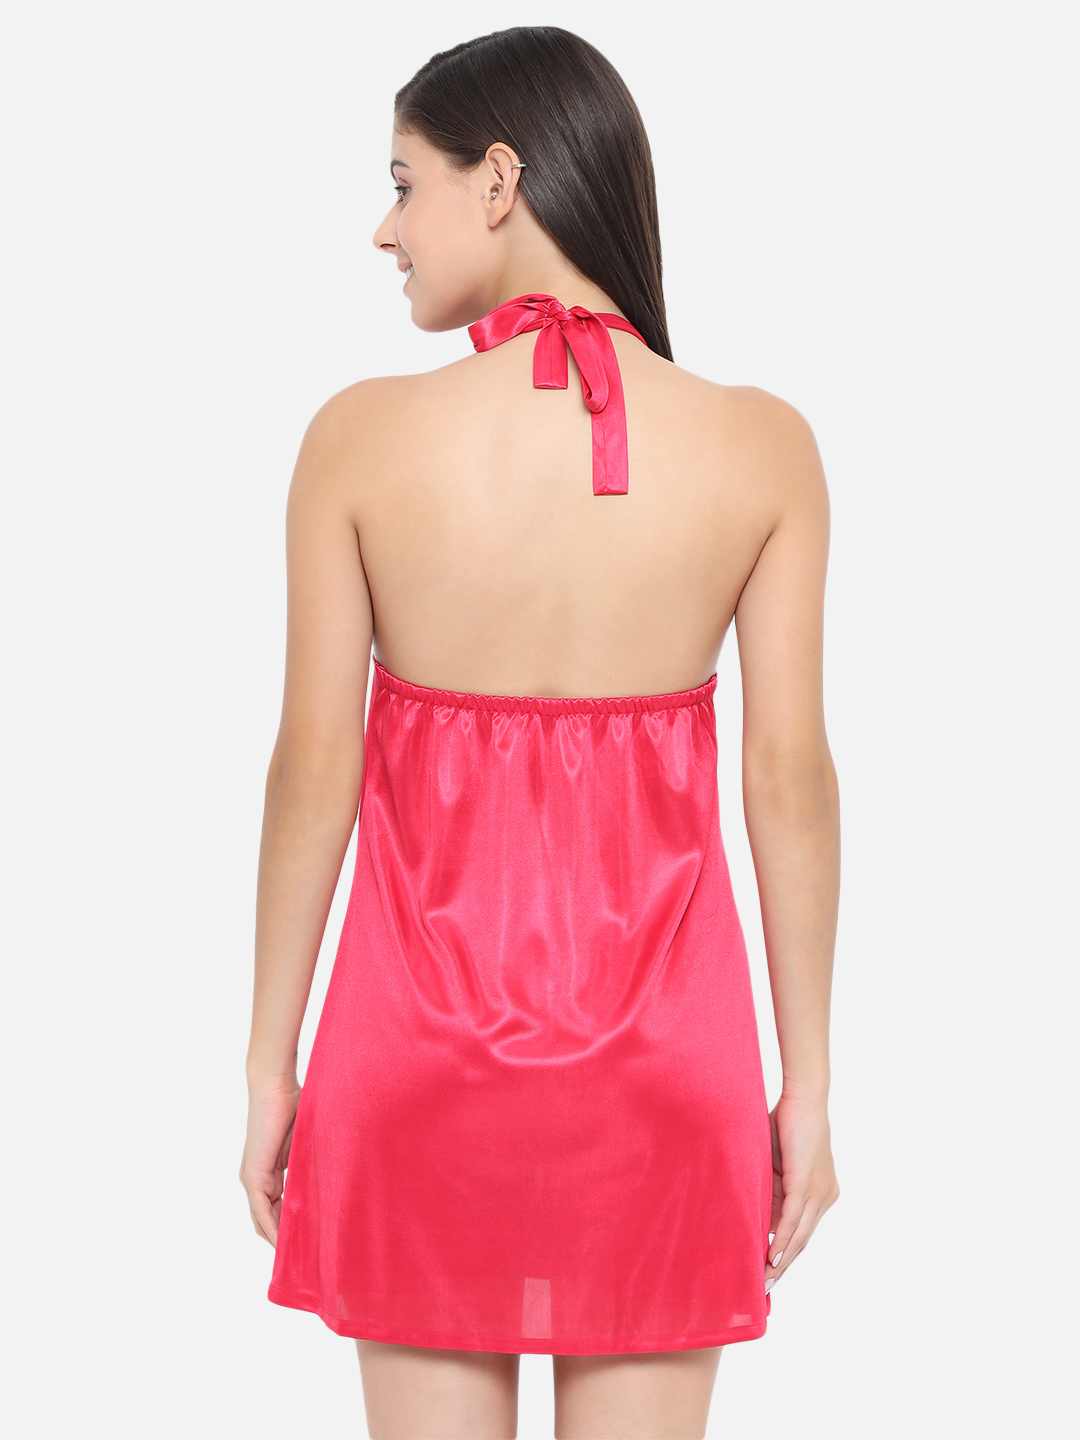 Sexy Honeymoon Burgundy Babydoll Lingerie Bikini Dress B41U – Klamotten